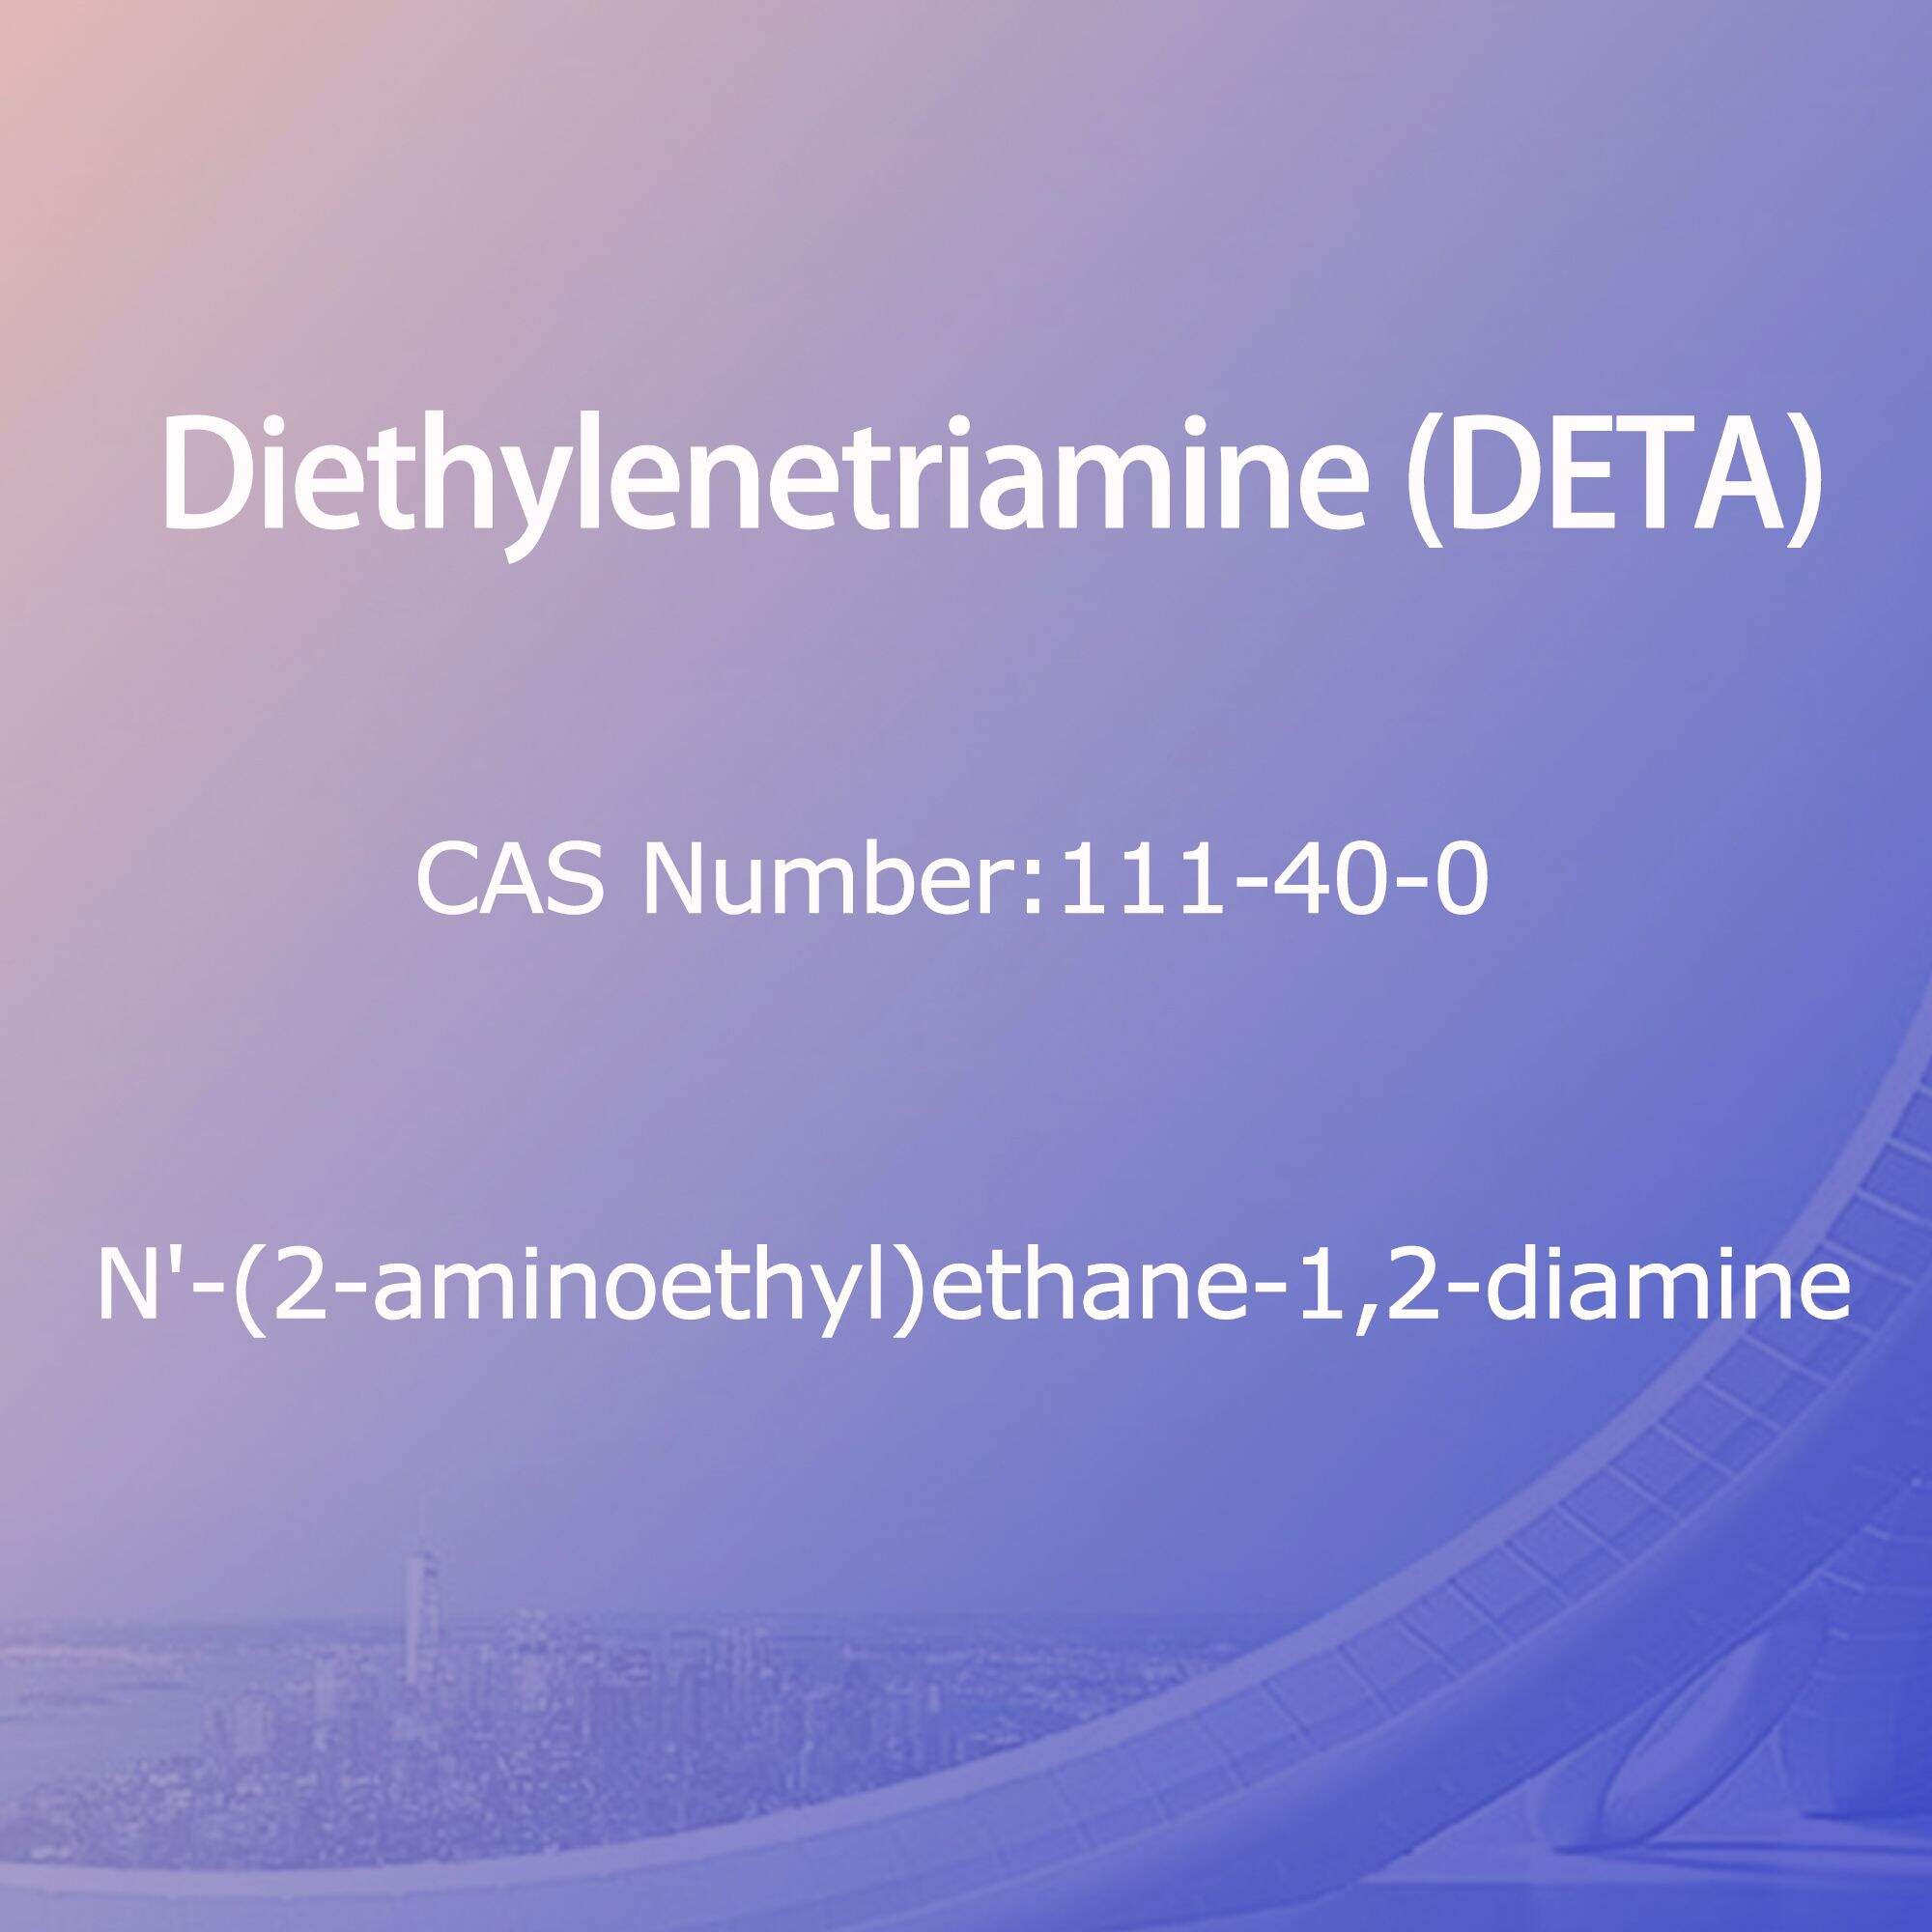 Diethylenetriamine (DETA),N'-(2-aminoethyl)ethane-1,2-diamine